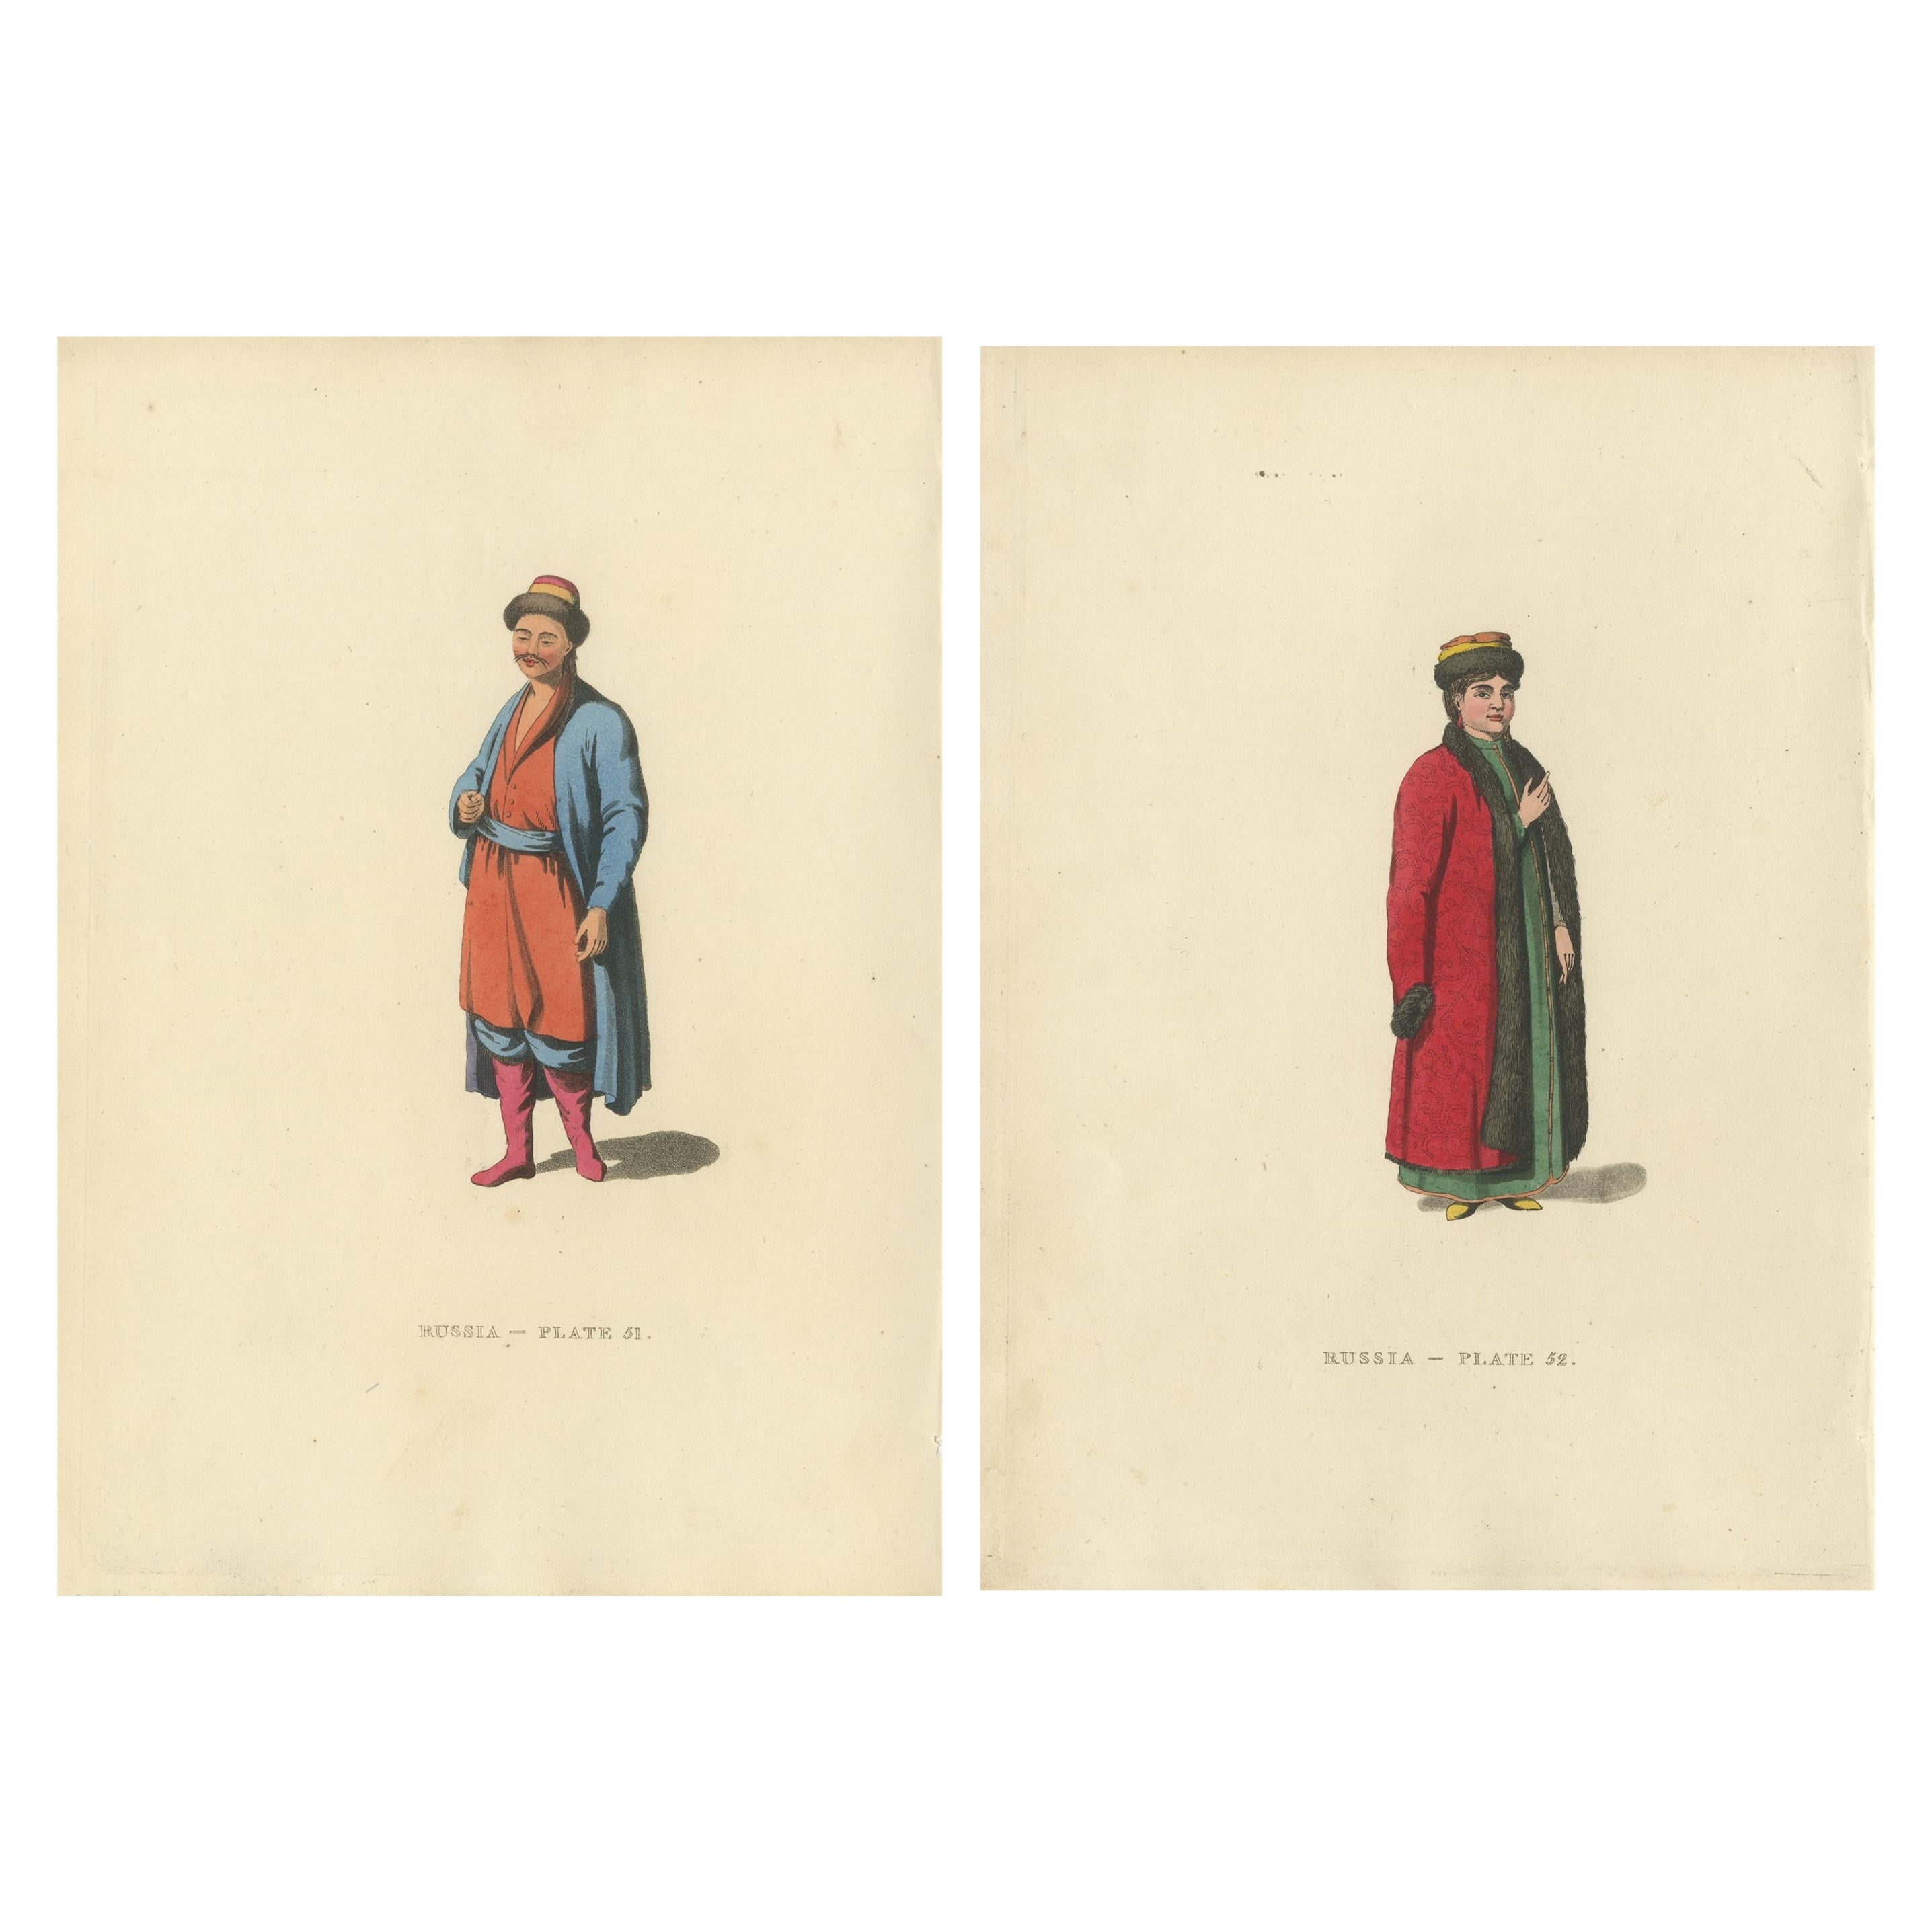 A Glimpse into Kalmyk Culture through William Alexander's 1814 Engravings